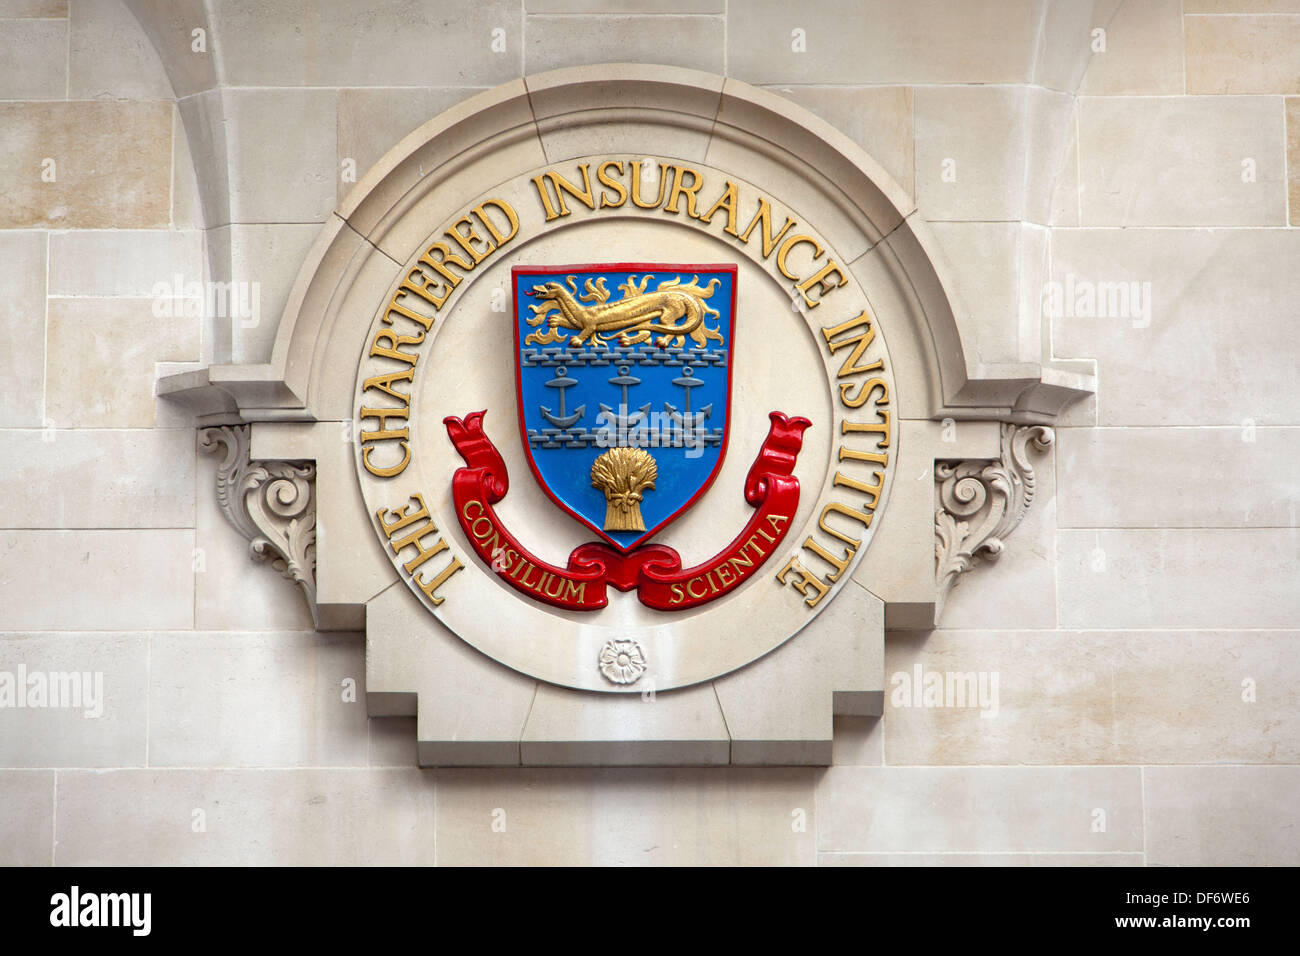 The Chartered Insurance Institute Crest,  Aldermanbury, London, England, UK. Stock Photo